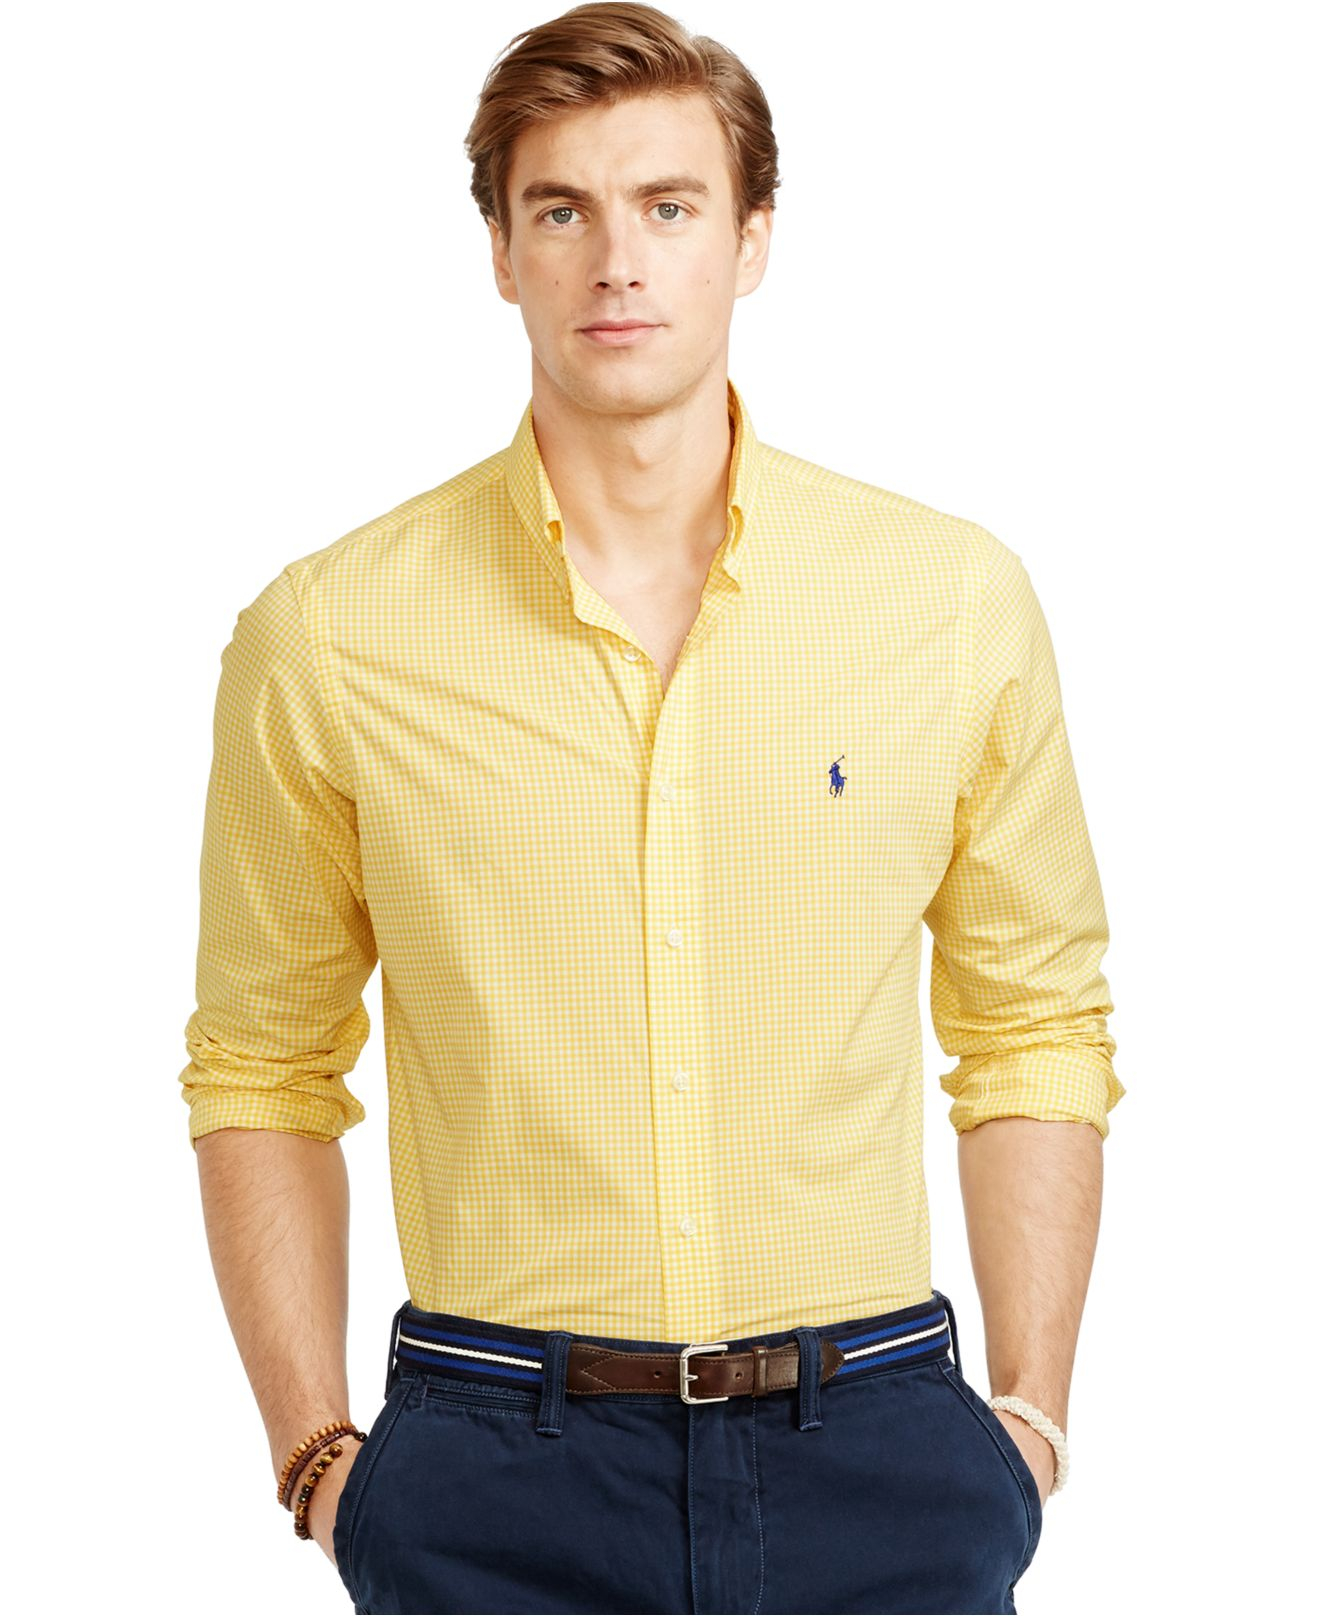 Lyst - Polo Ralph Lauren Checked Poplin Shirt in Yellow for Men